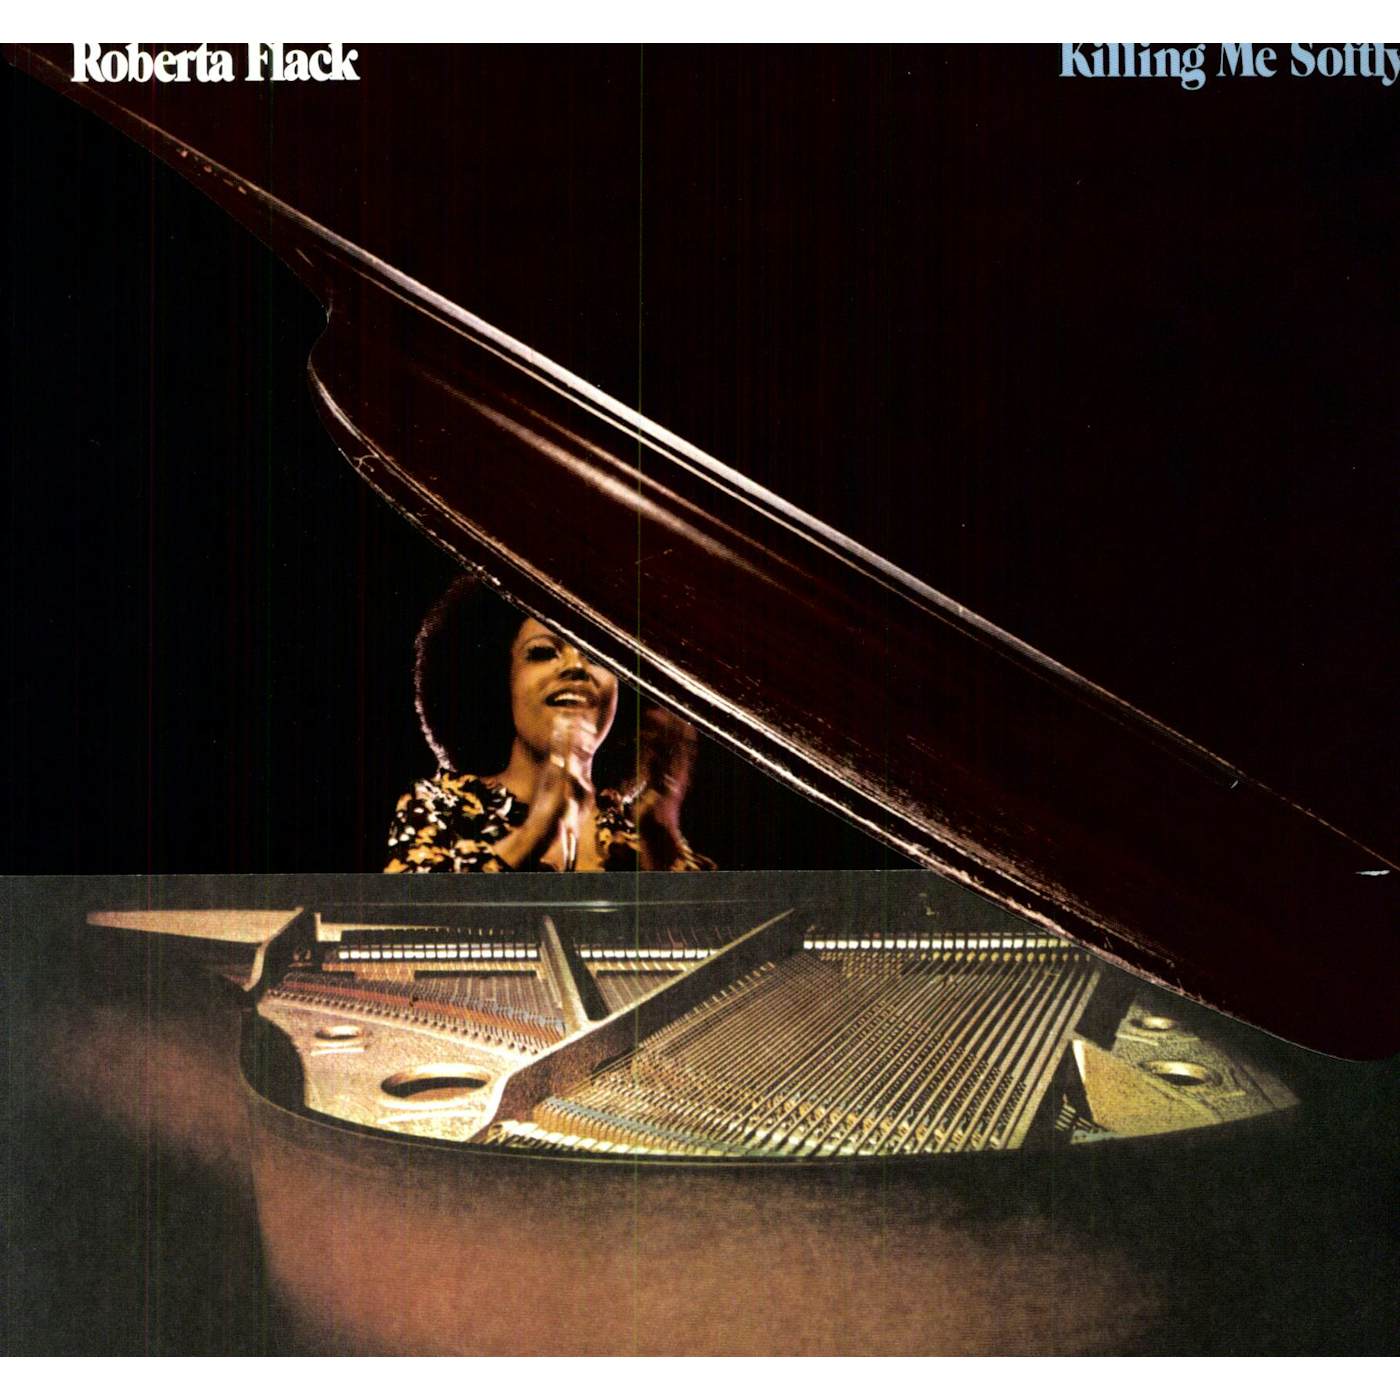 Roberta Flack KILLING ME SOFTLY Vinyl Record - 180 Gram Pressing